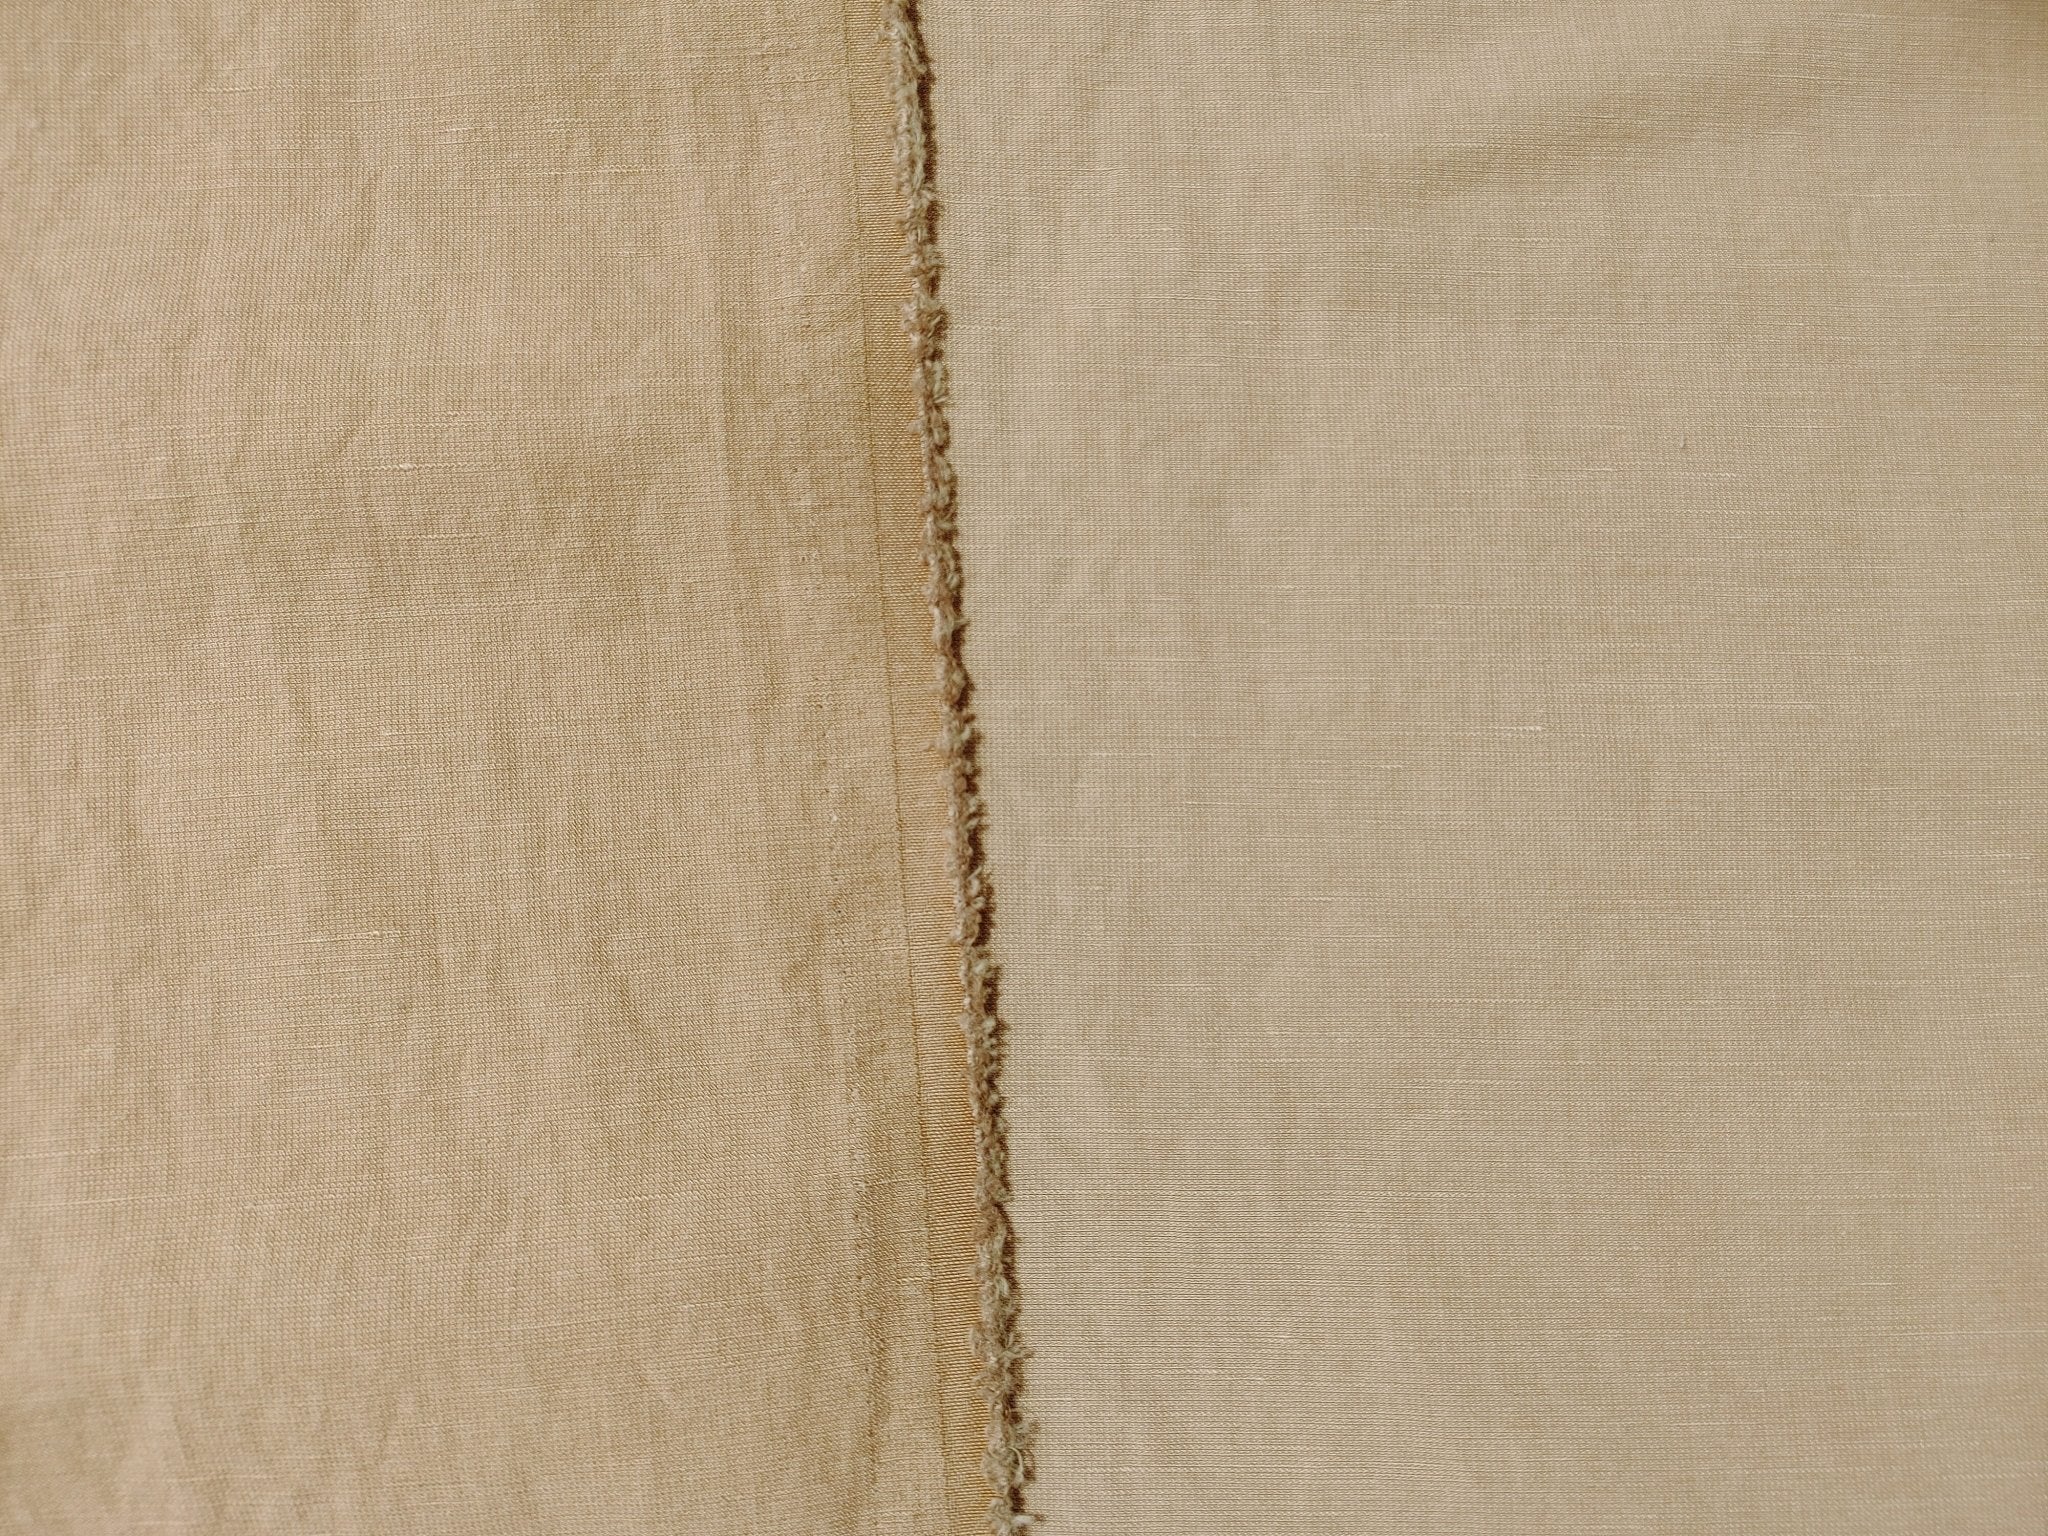 Soft Beige Linen Blend: Dobby Weave with Warp Span Stretch Fabric 7787 - The Linen Lab - Beige